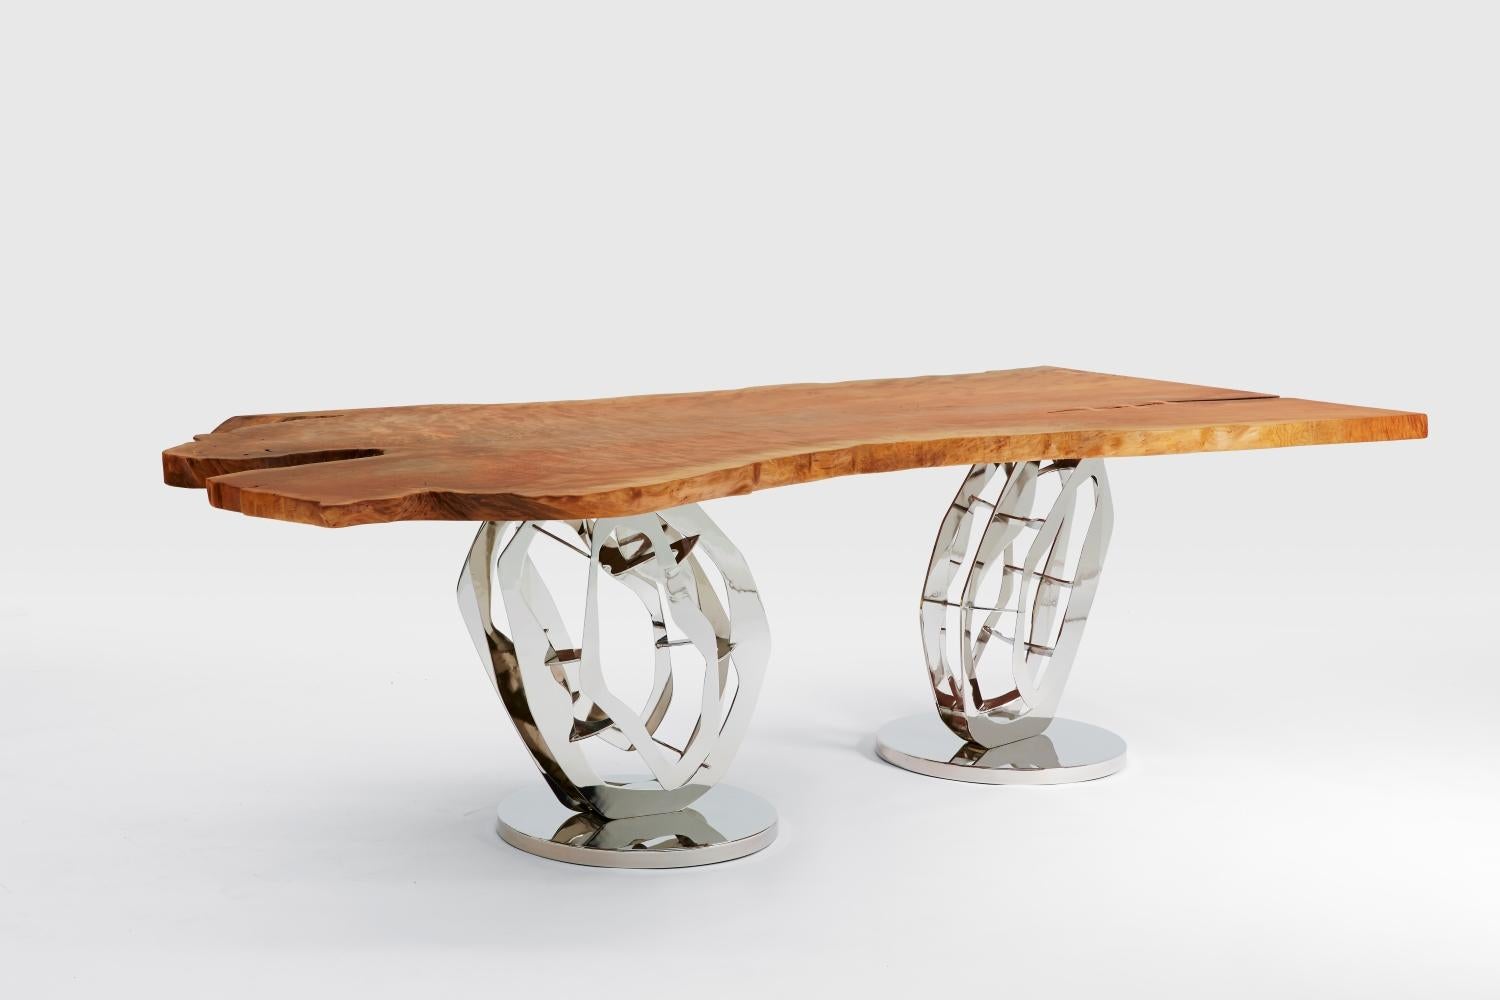 Organique Table Odyssey moderne en bois organique antique à bord vif, base en nickel poli en vente